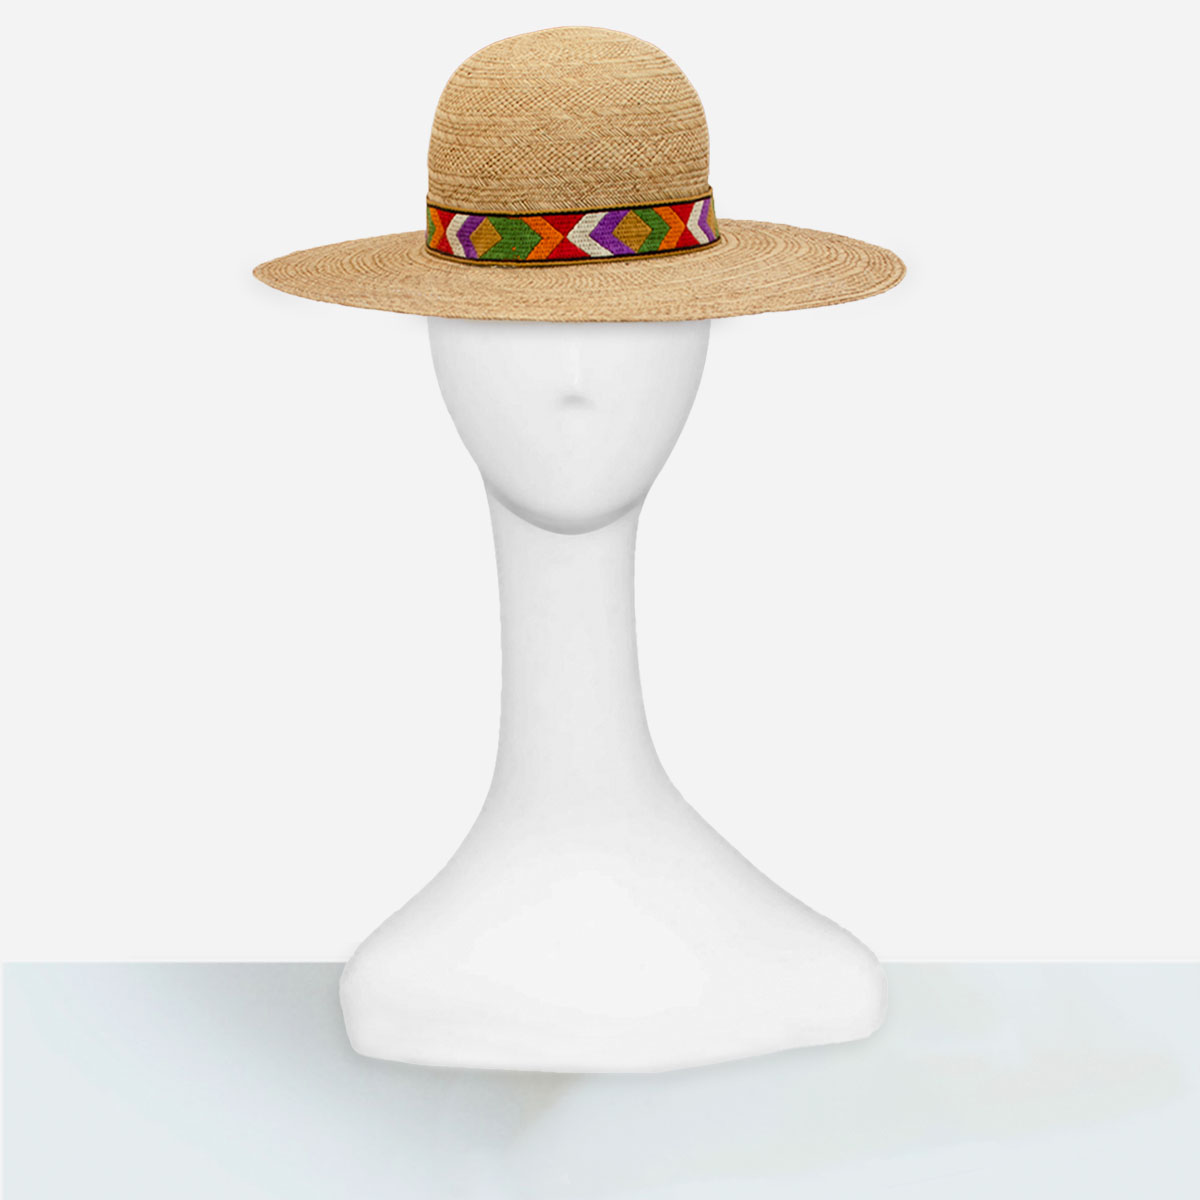 Southwestern Straw hat